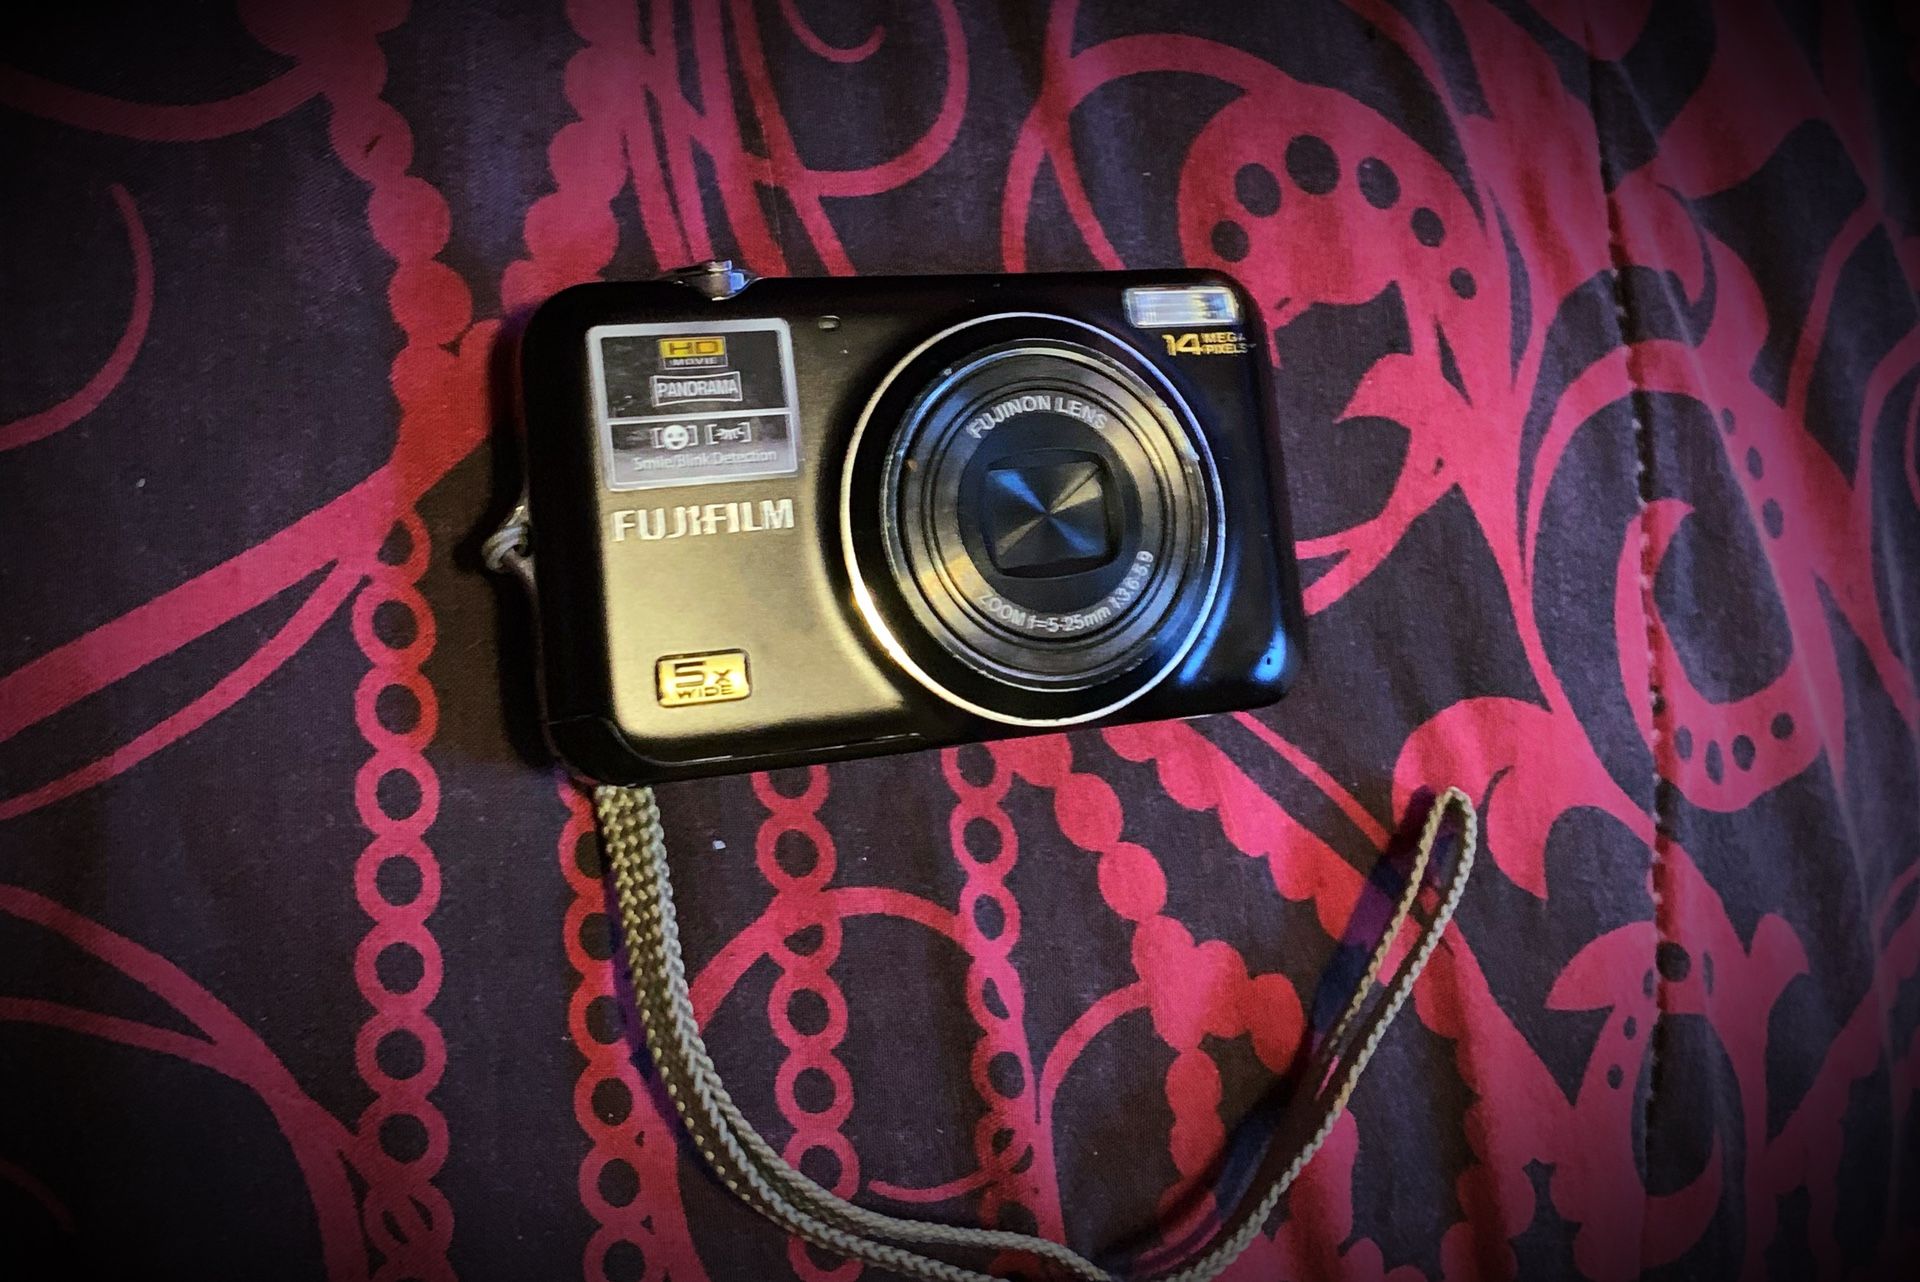 Fujifilm digital camera